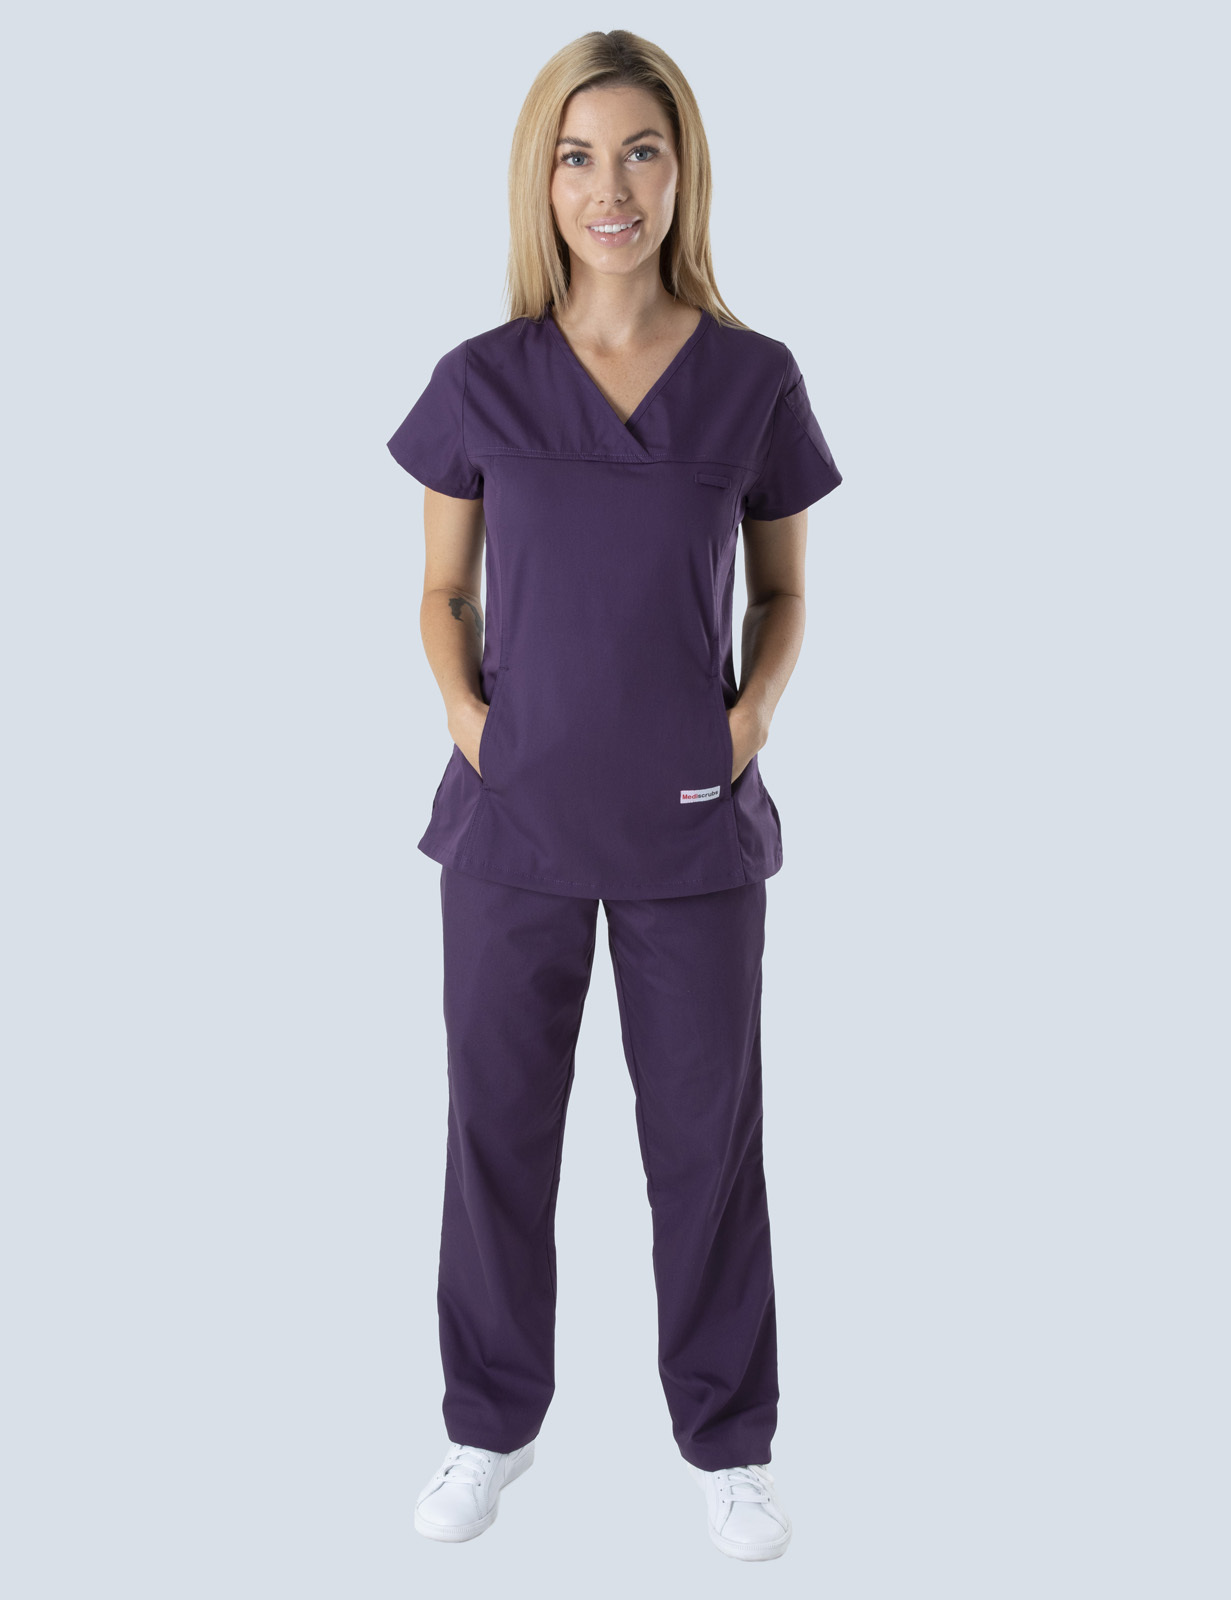 Biloela Hospital Healthcare Department Uniform Set Bundle (Women's Fit Solid Top and Cargo pants in Aubergine incl Logos)